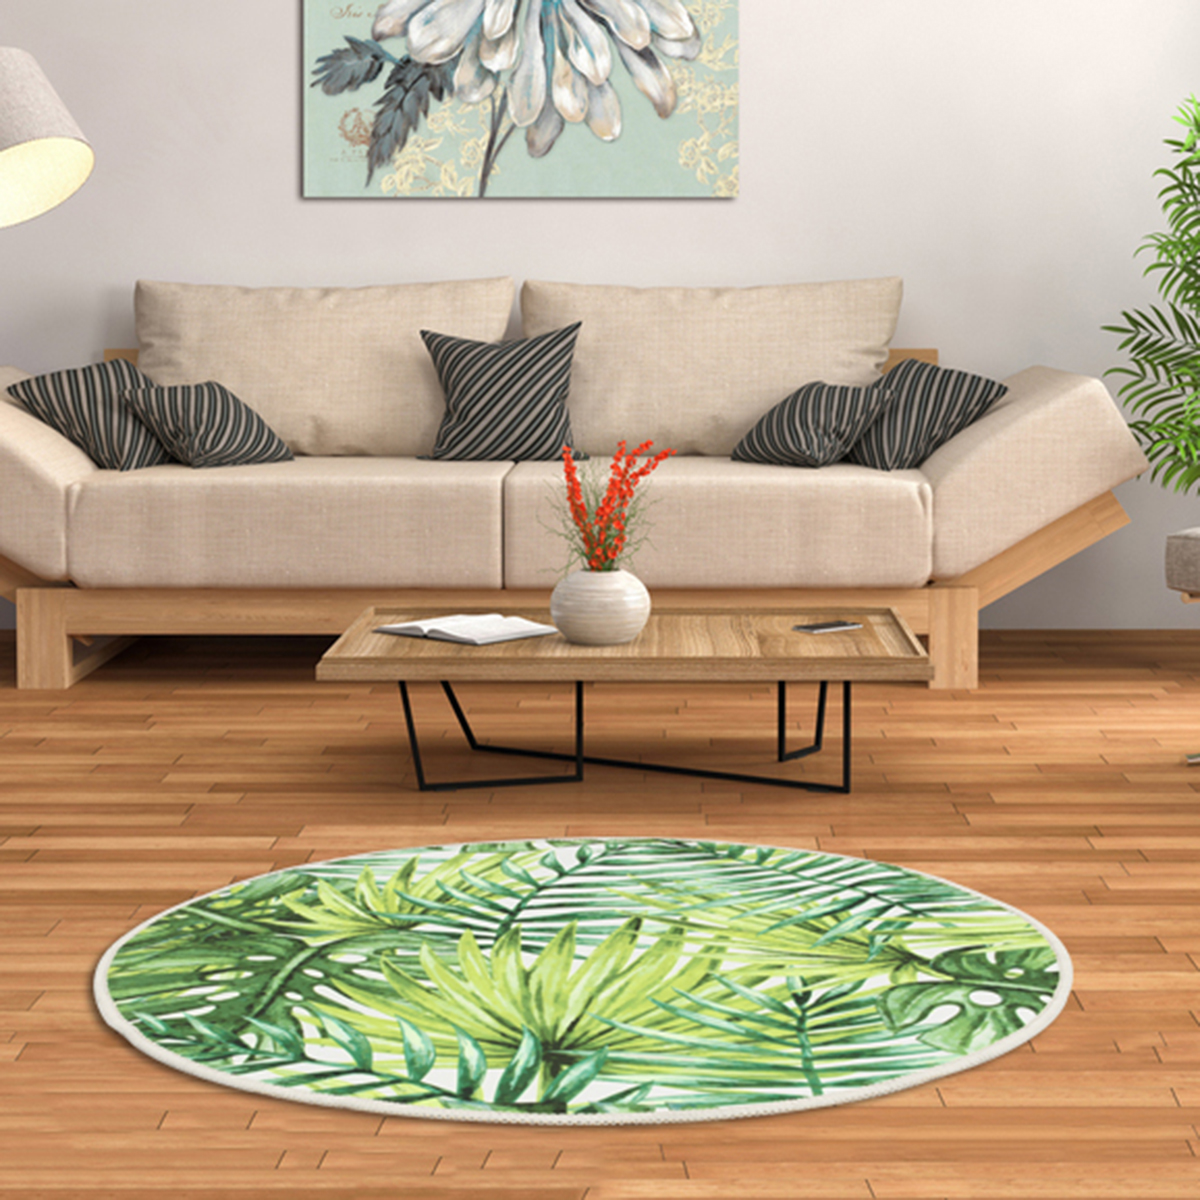 Floor Round Mat Tropical Green Anti Slip Leaves Carpet Home Living Room Coffee Table Sofa Floor Mat Supplies